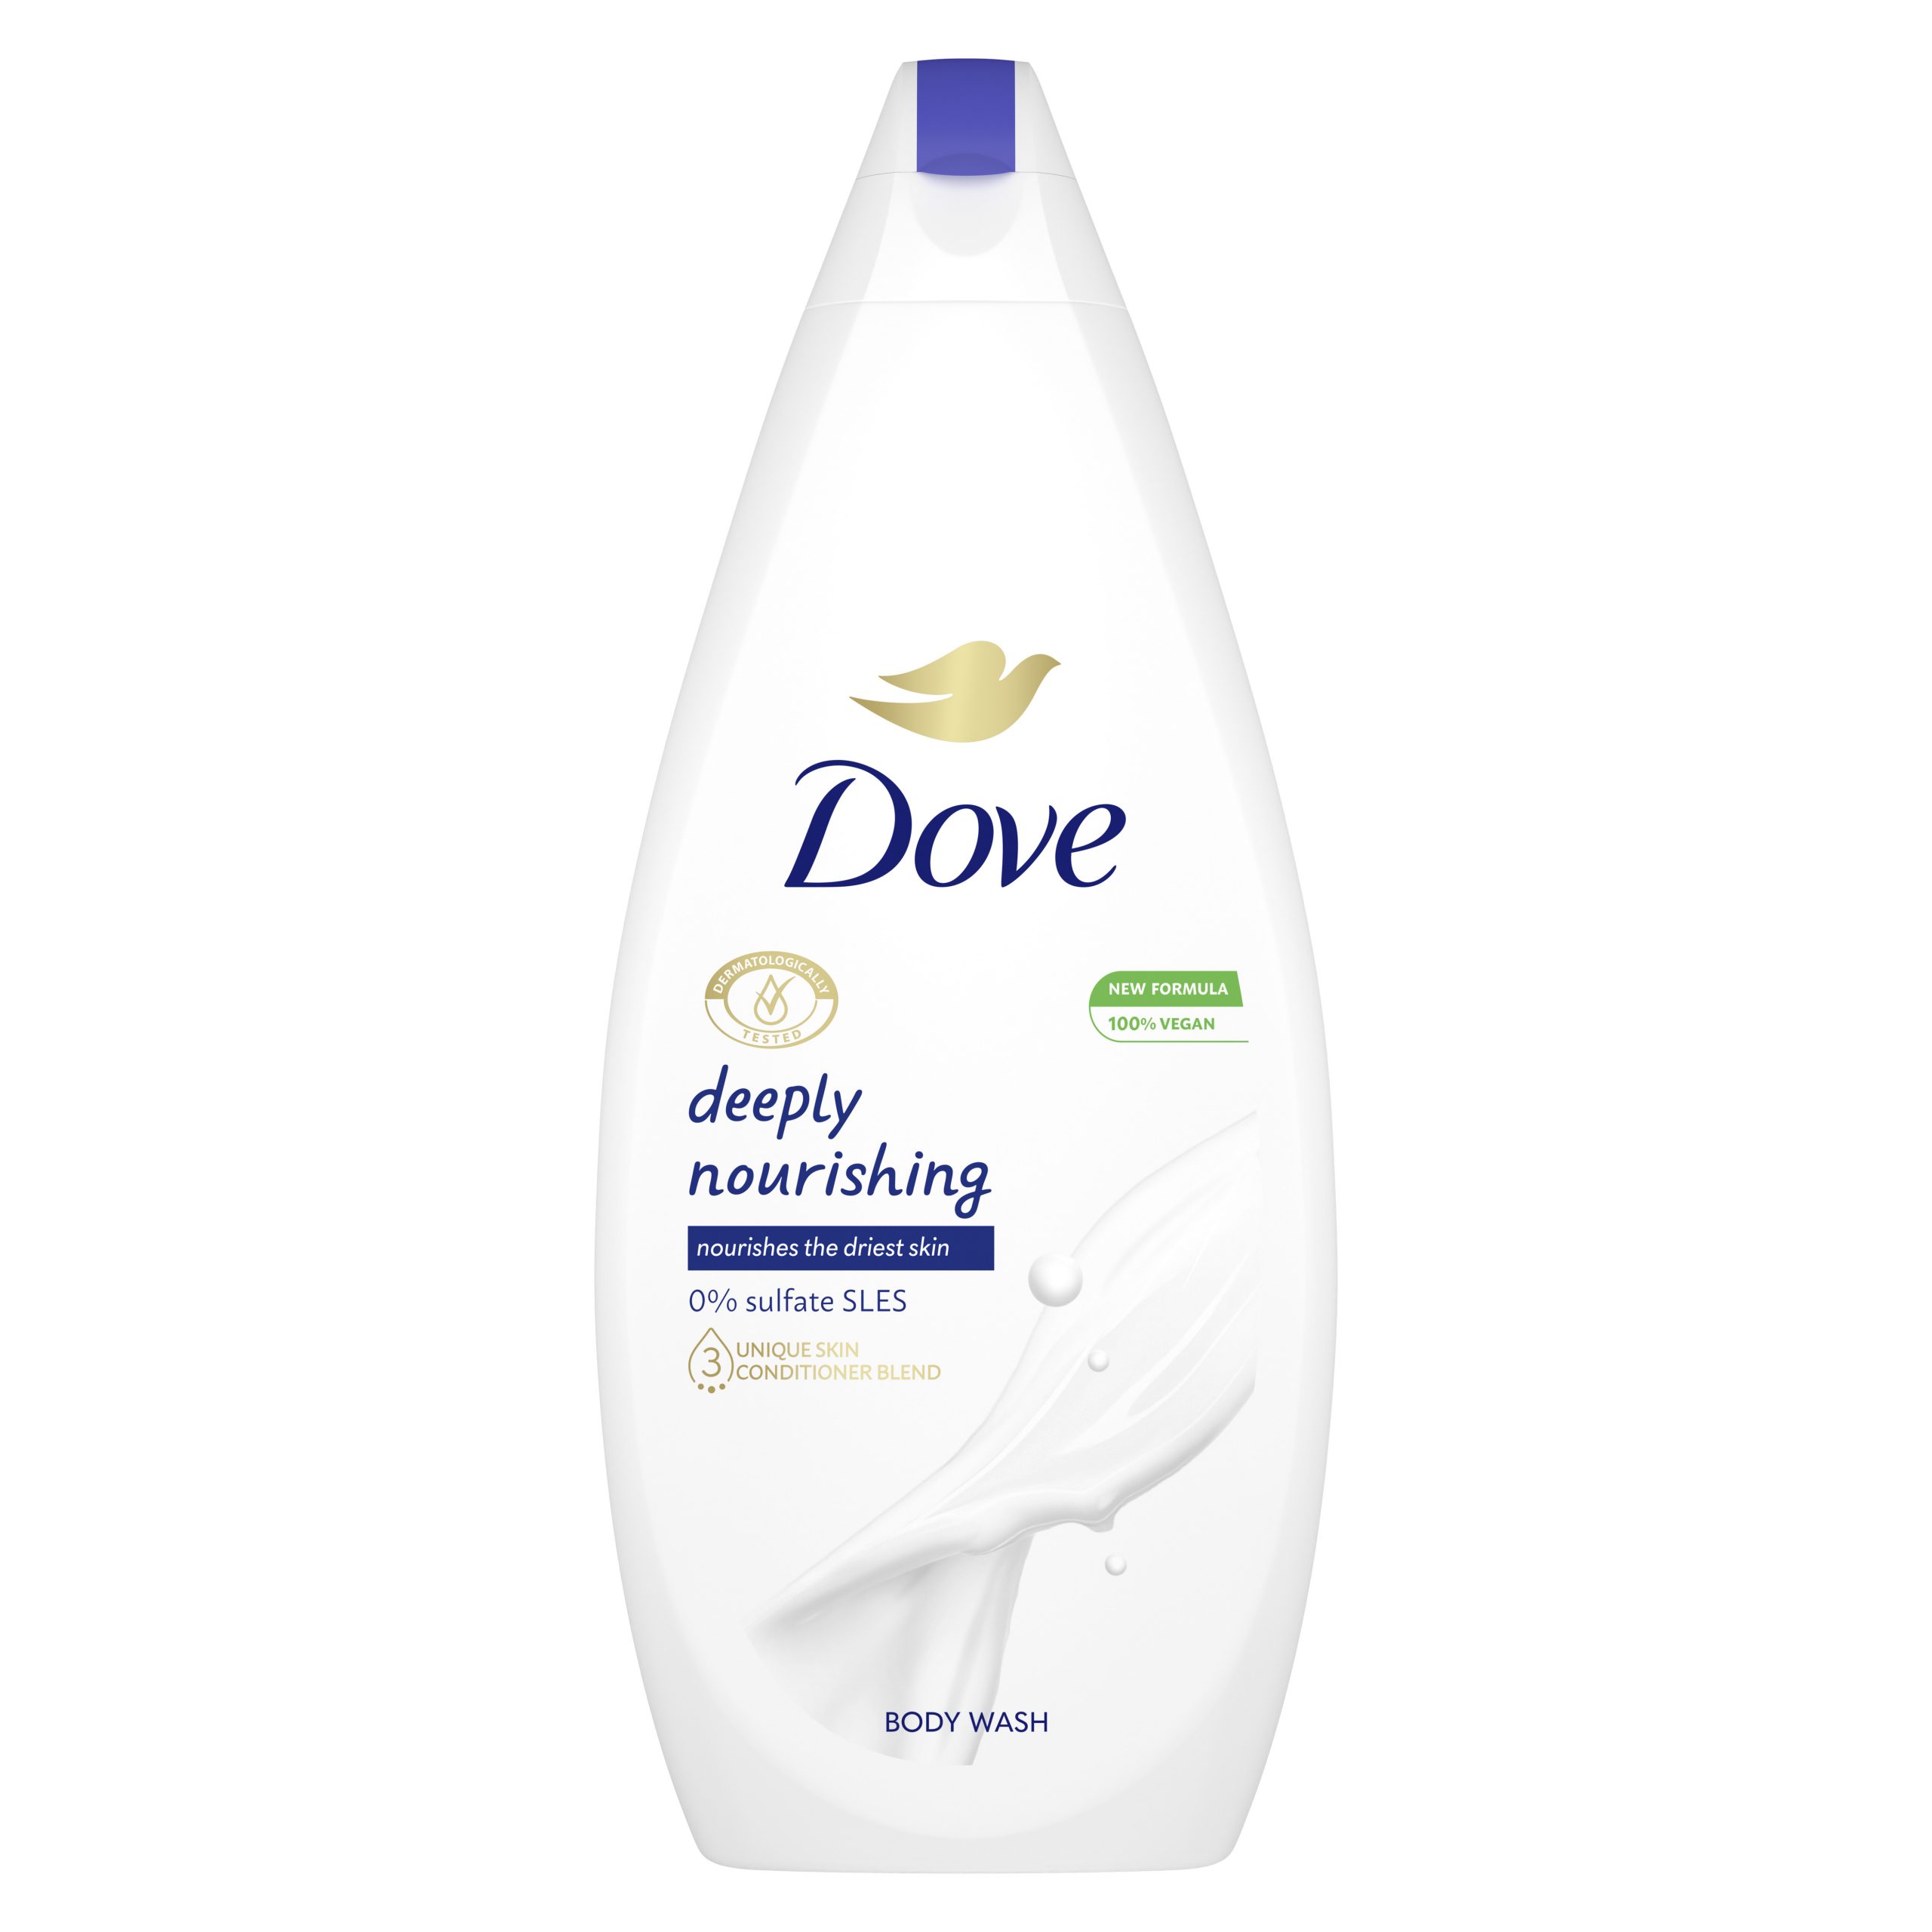 Dove reformulates body wash range, adds hypoallergenic variant